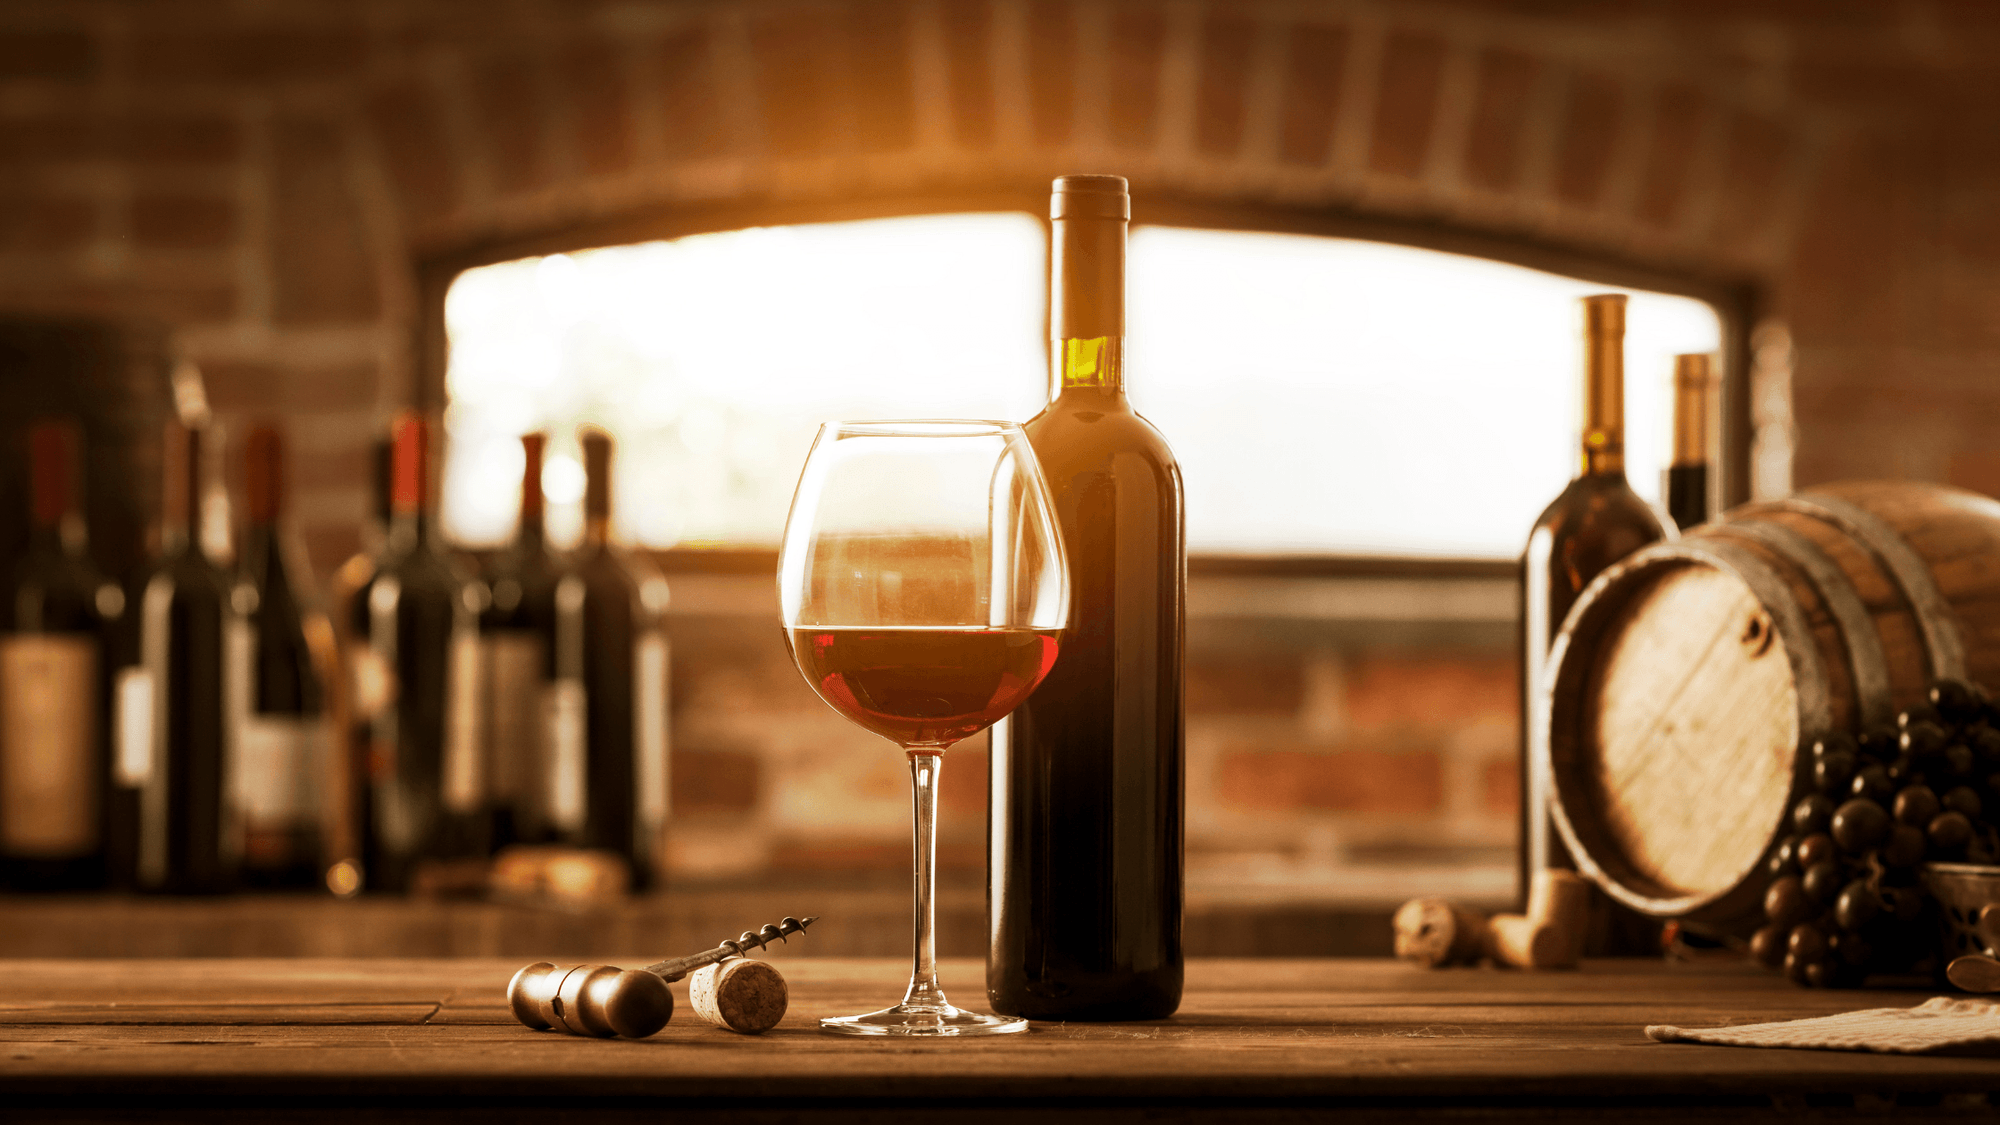 7 Creative Wine Rack Ideas When You Don’t Have a Wine Cellar | Wine Stash